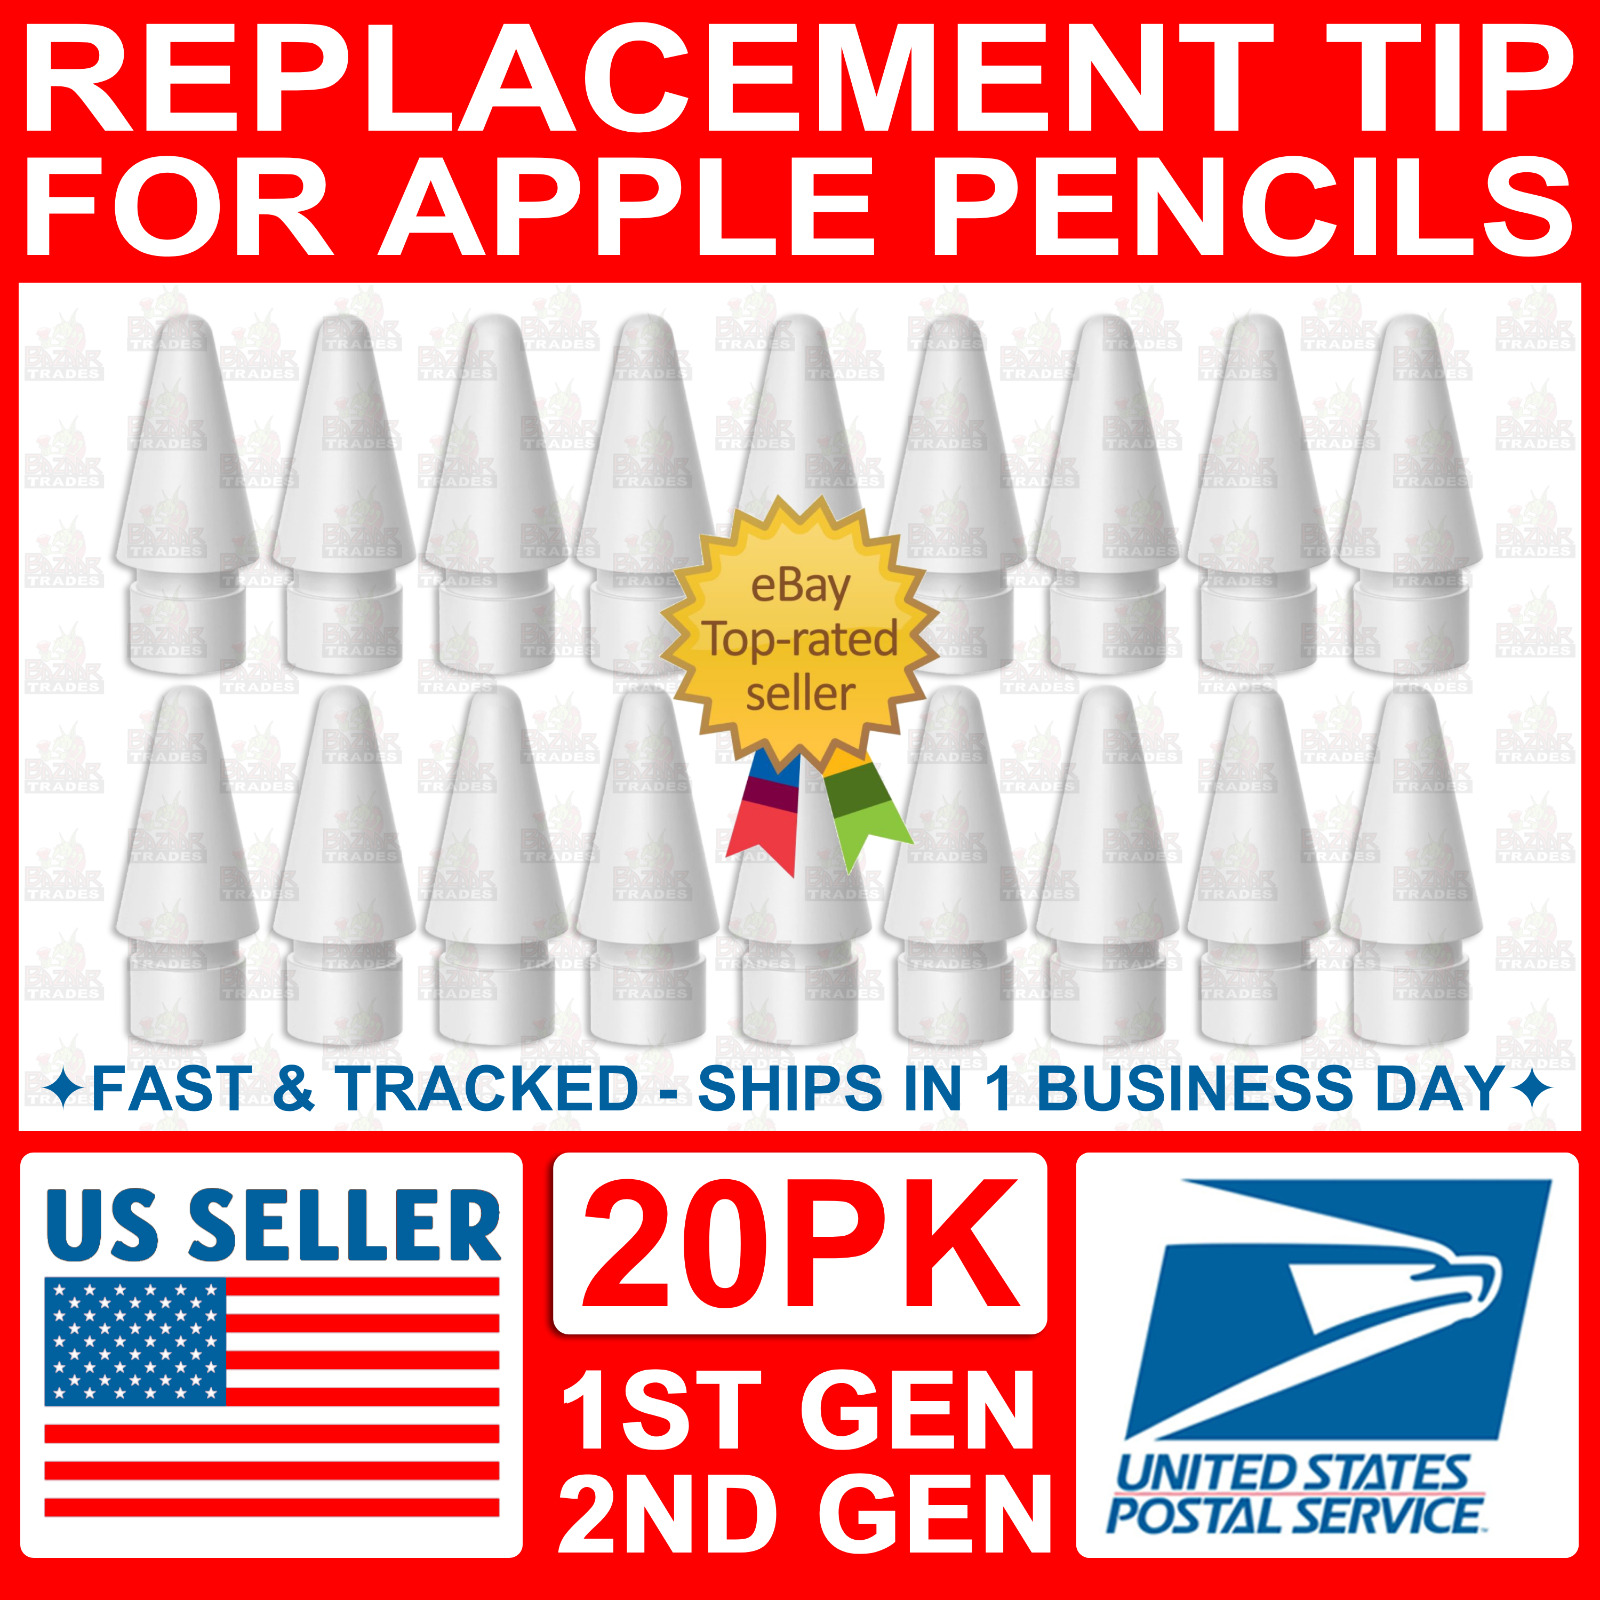 20PK Replacement Tips for Apple Pencil 1st Gen 2nd Gen Pen iPad Pro Nib iPencil